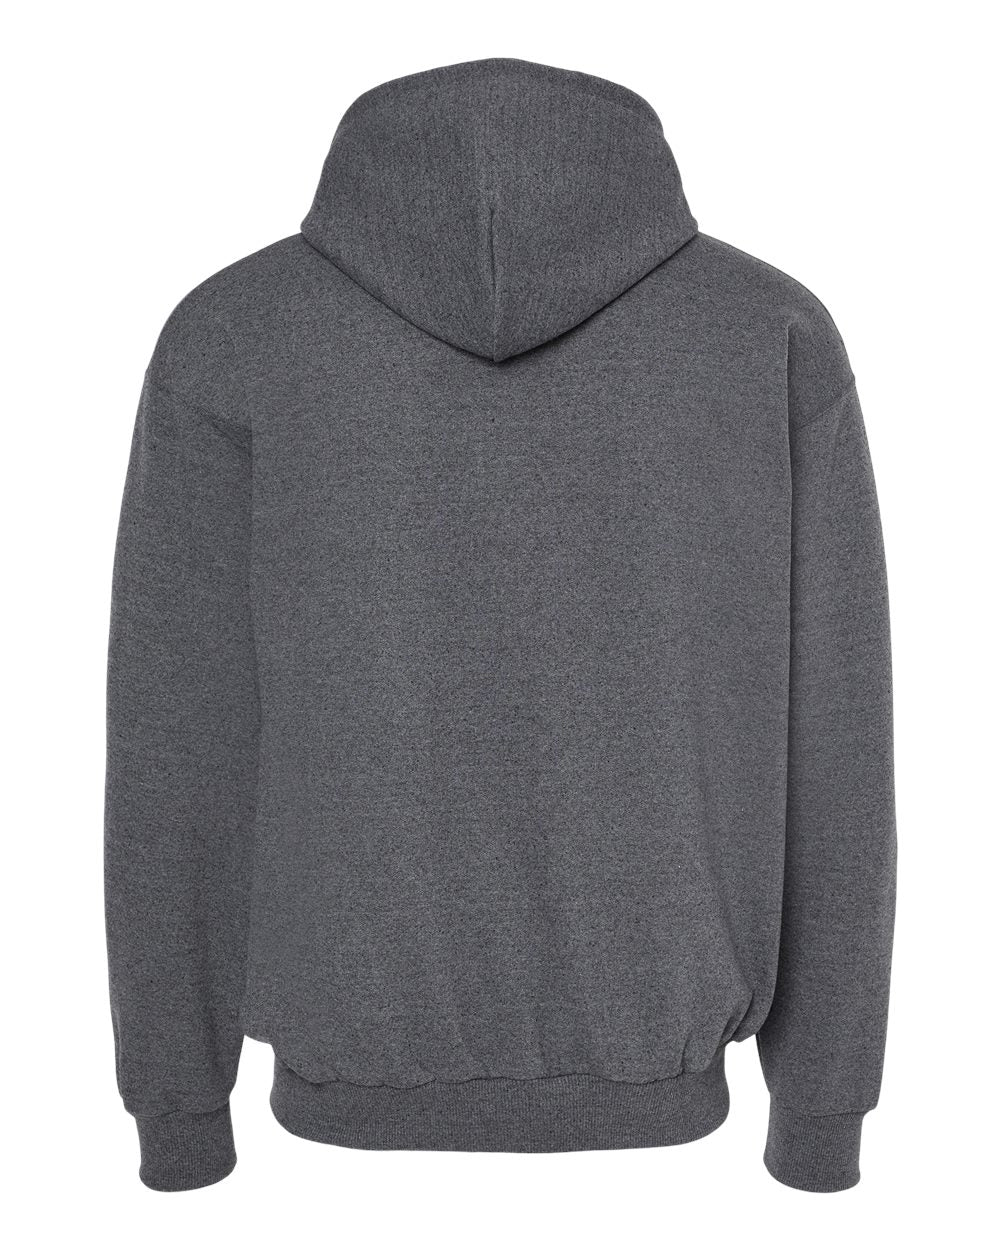 King Fashion Full-Zip Hooded Sweatshirt KF9017 #color_Charcoal Mix